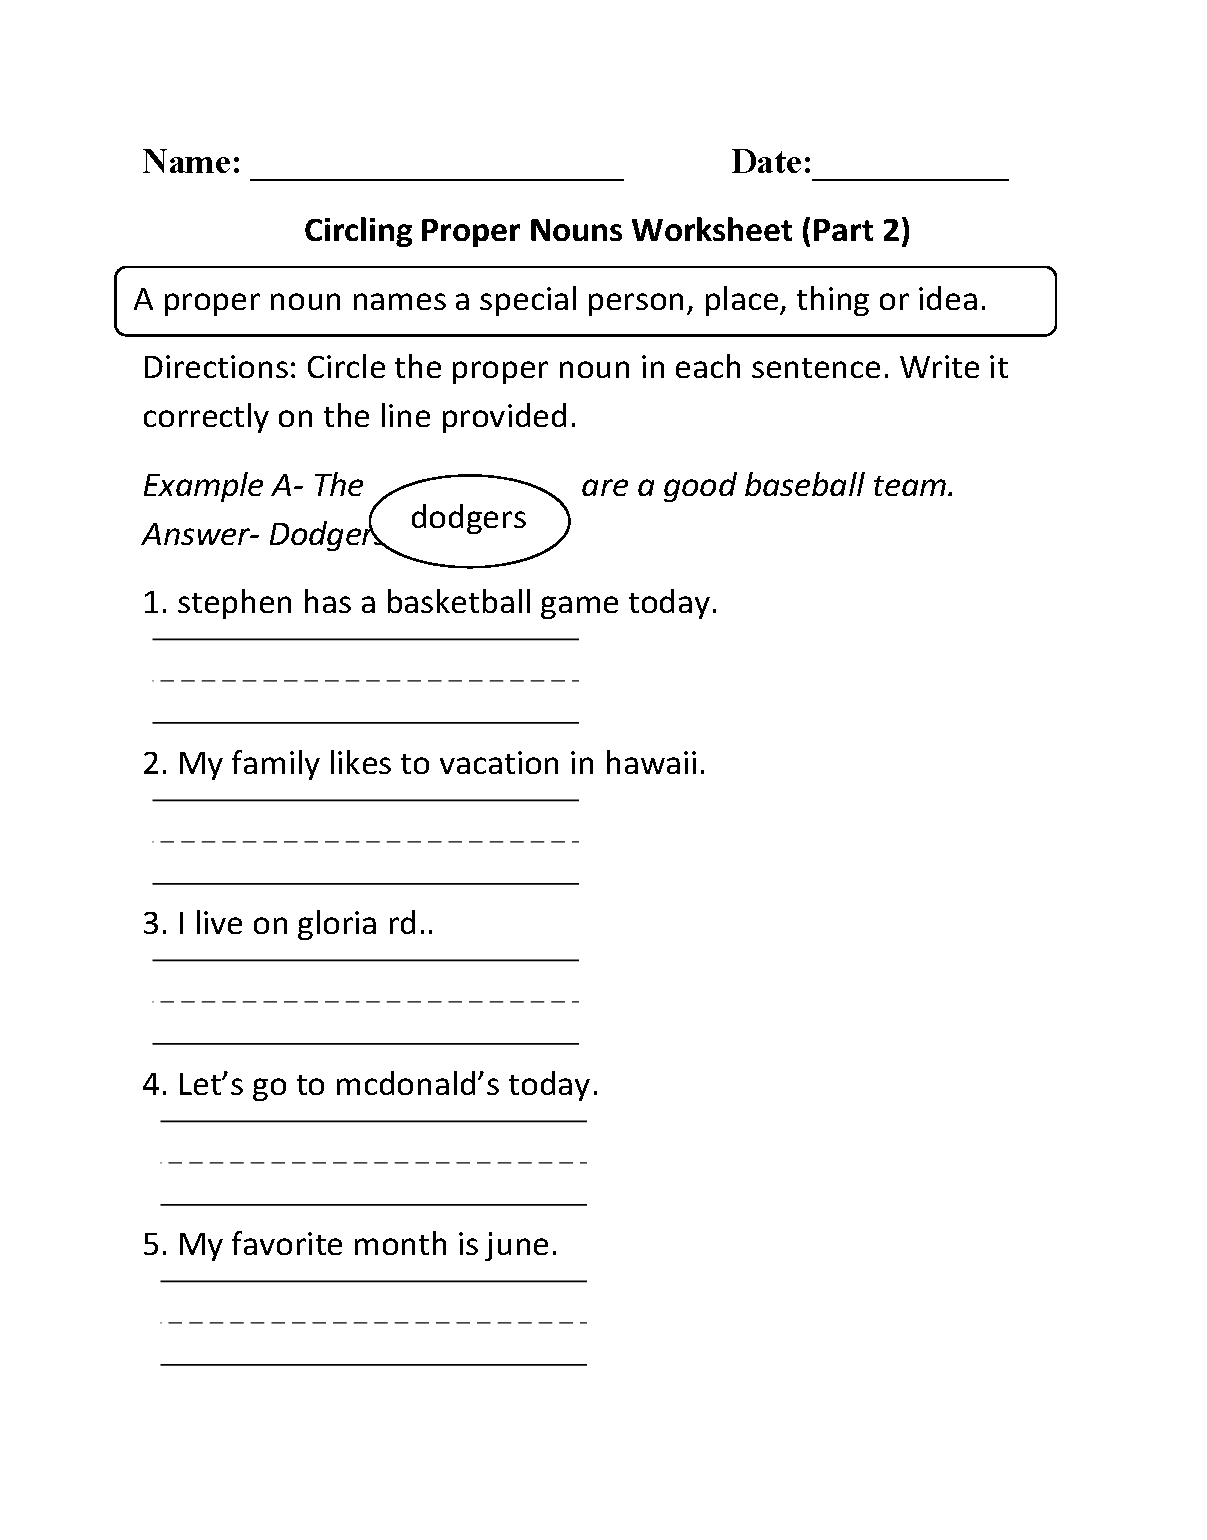 proper-and-common-nouns-worksheets-circling-proper-nouns-worksheet-part-2